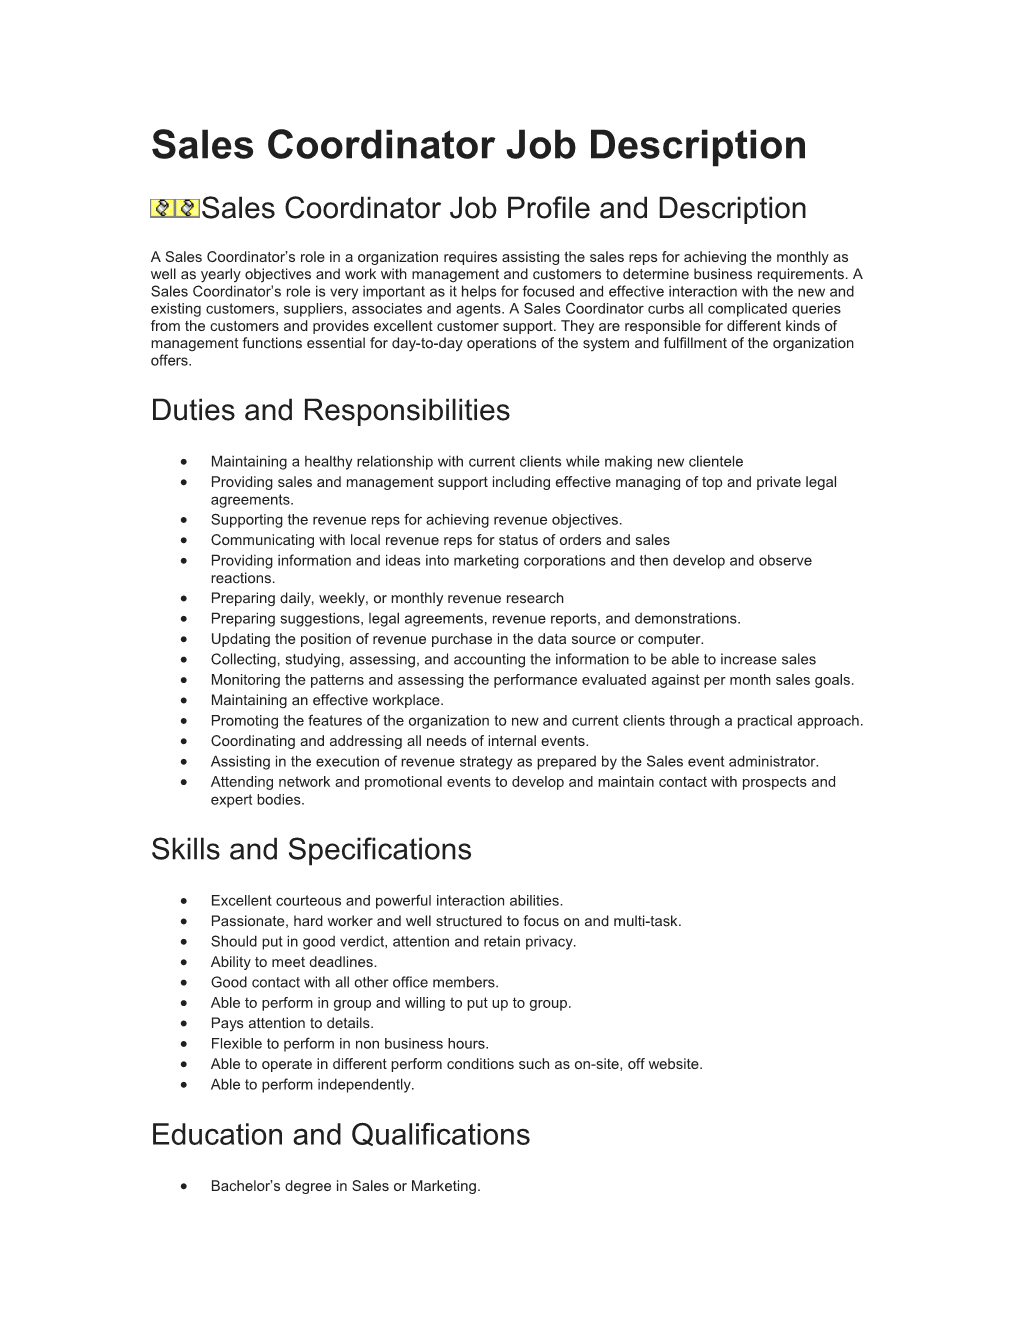 Sales Coordinator Job Description